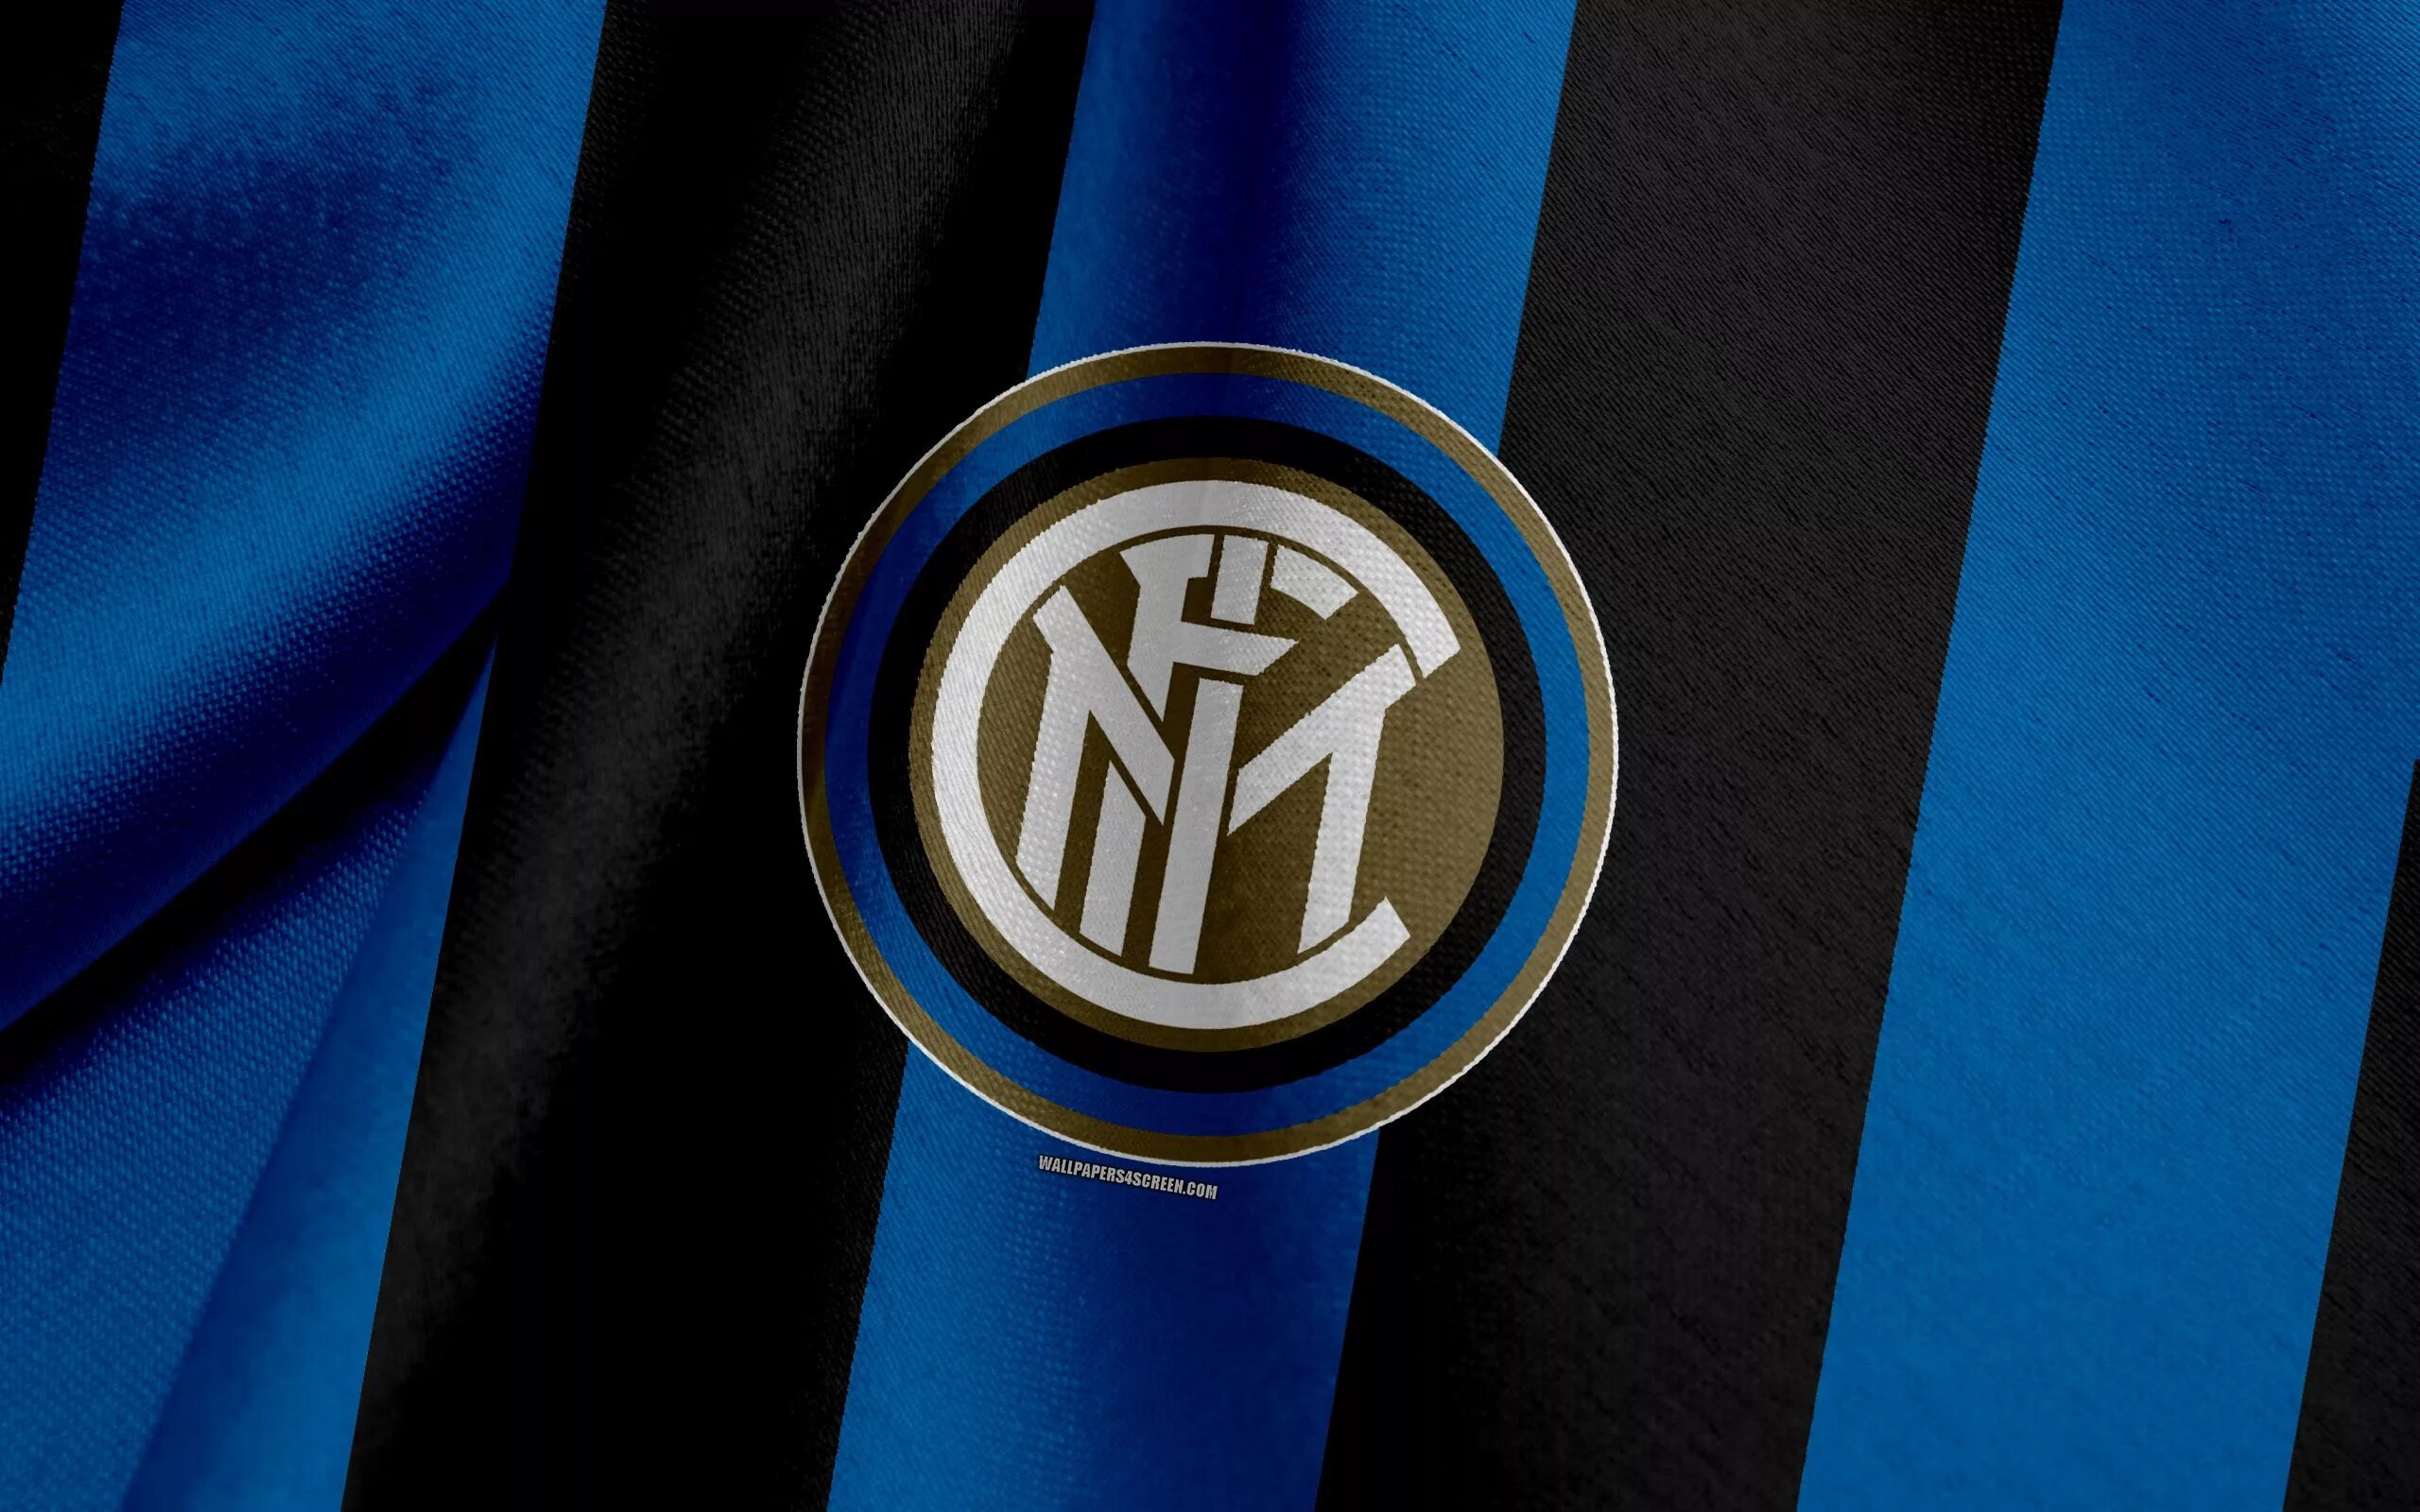 Интернационале магазин. Флаг ФК Интер. Постеры FC Internazionale Milano.